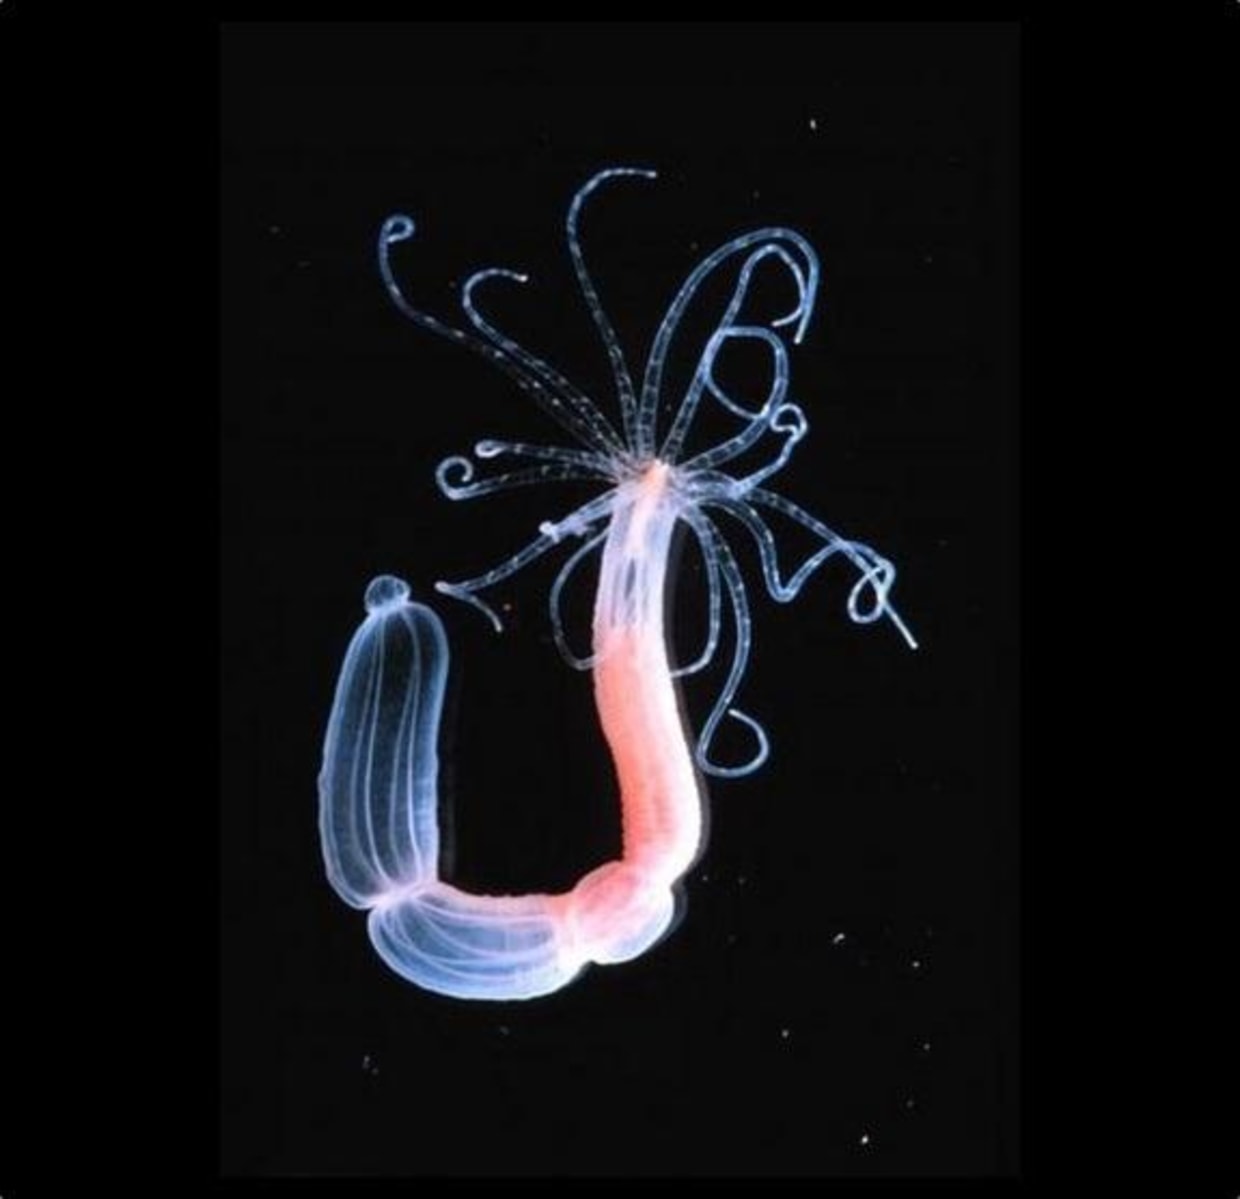 Sea Anemones Are Half-Plant, Half-Animal, Gene Study Finds